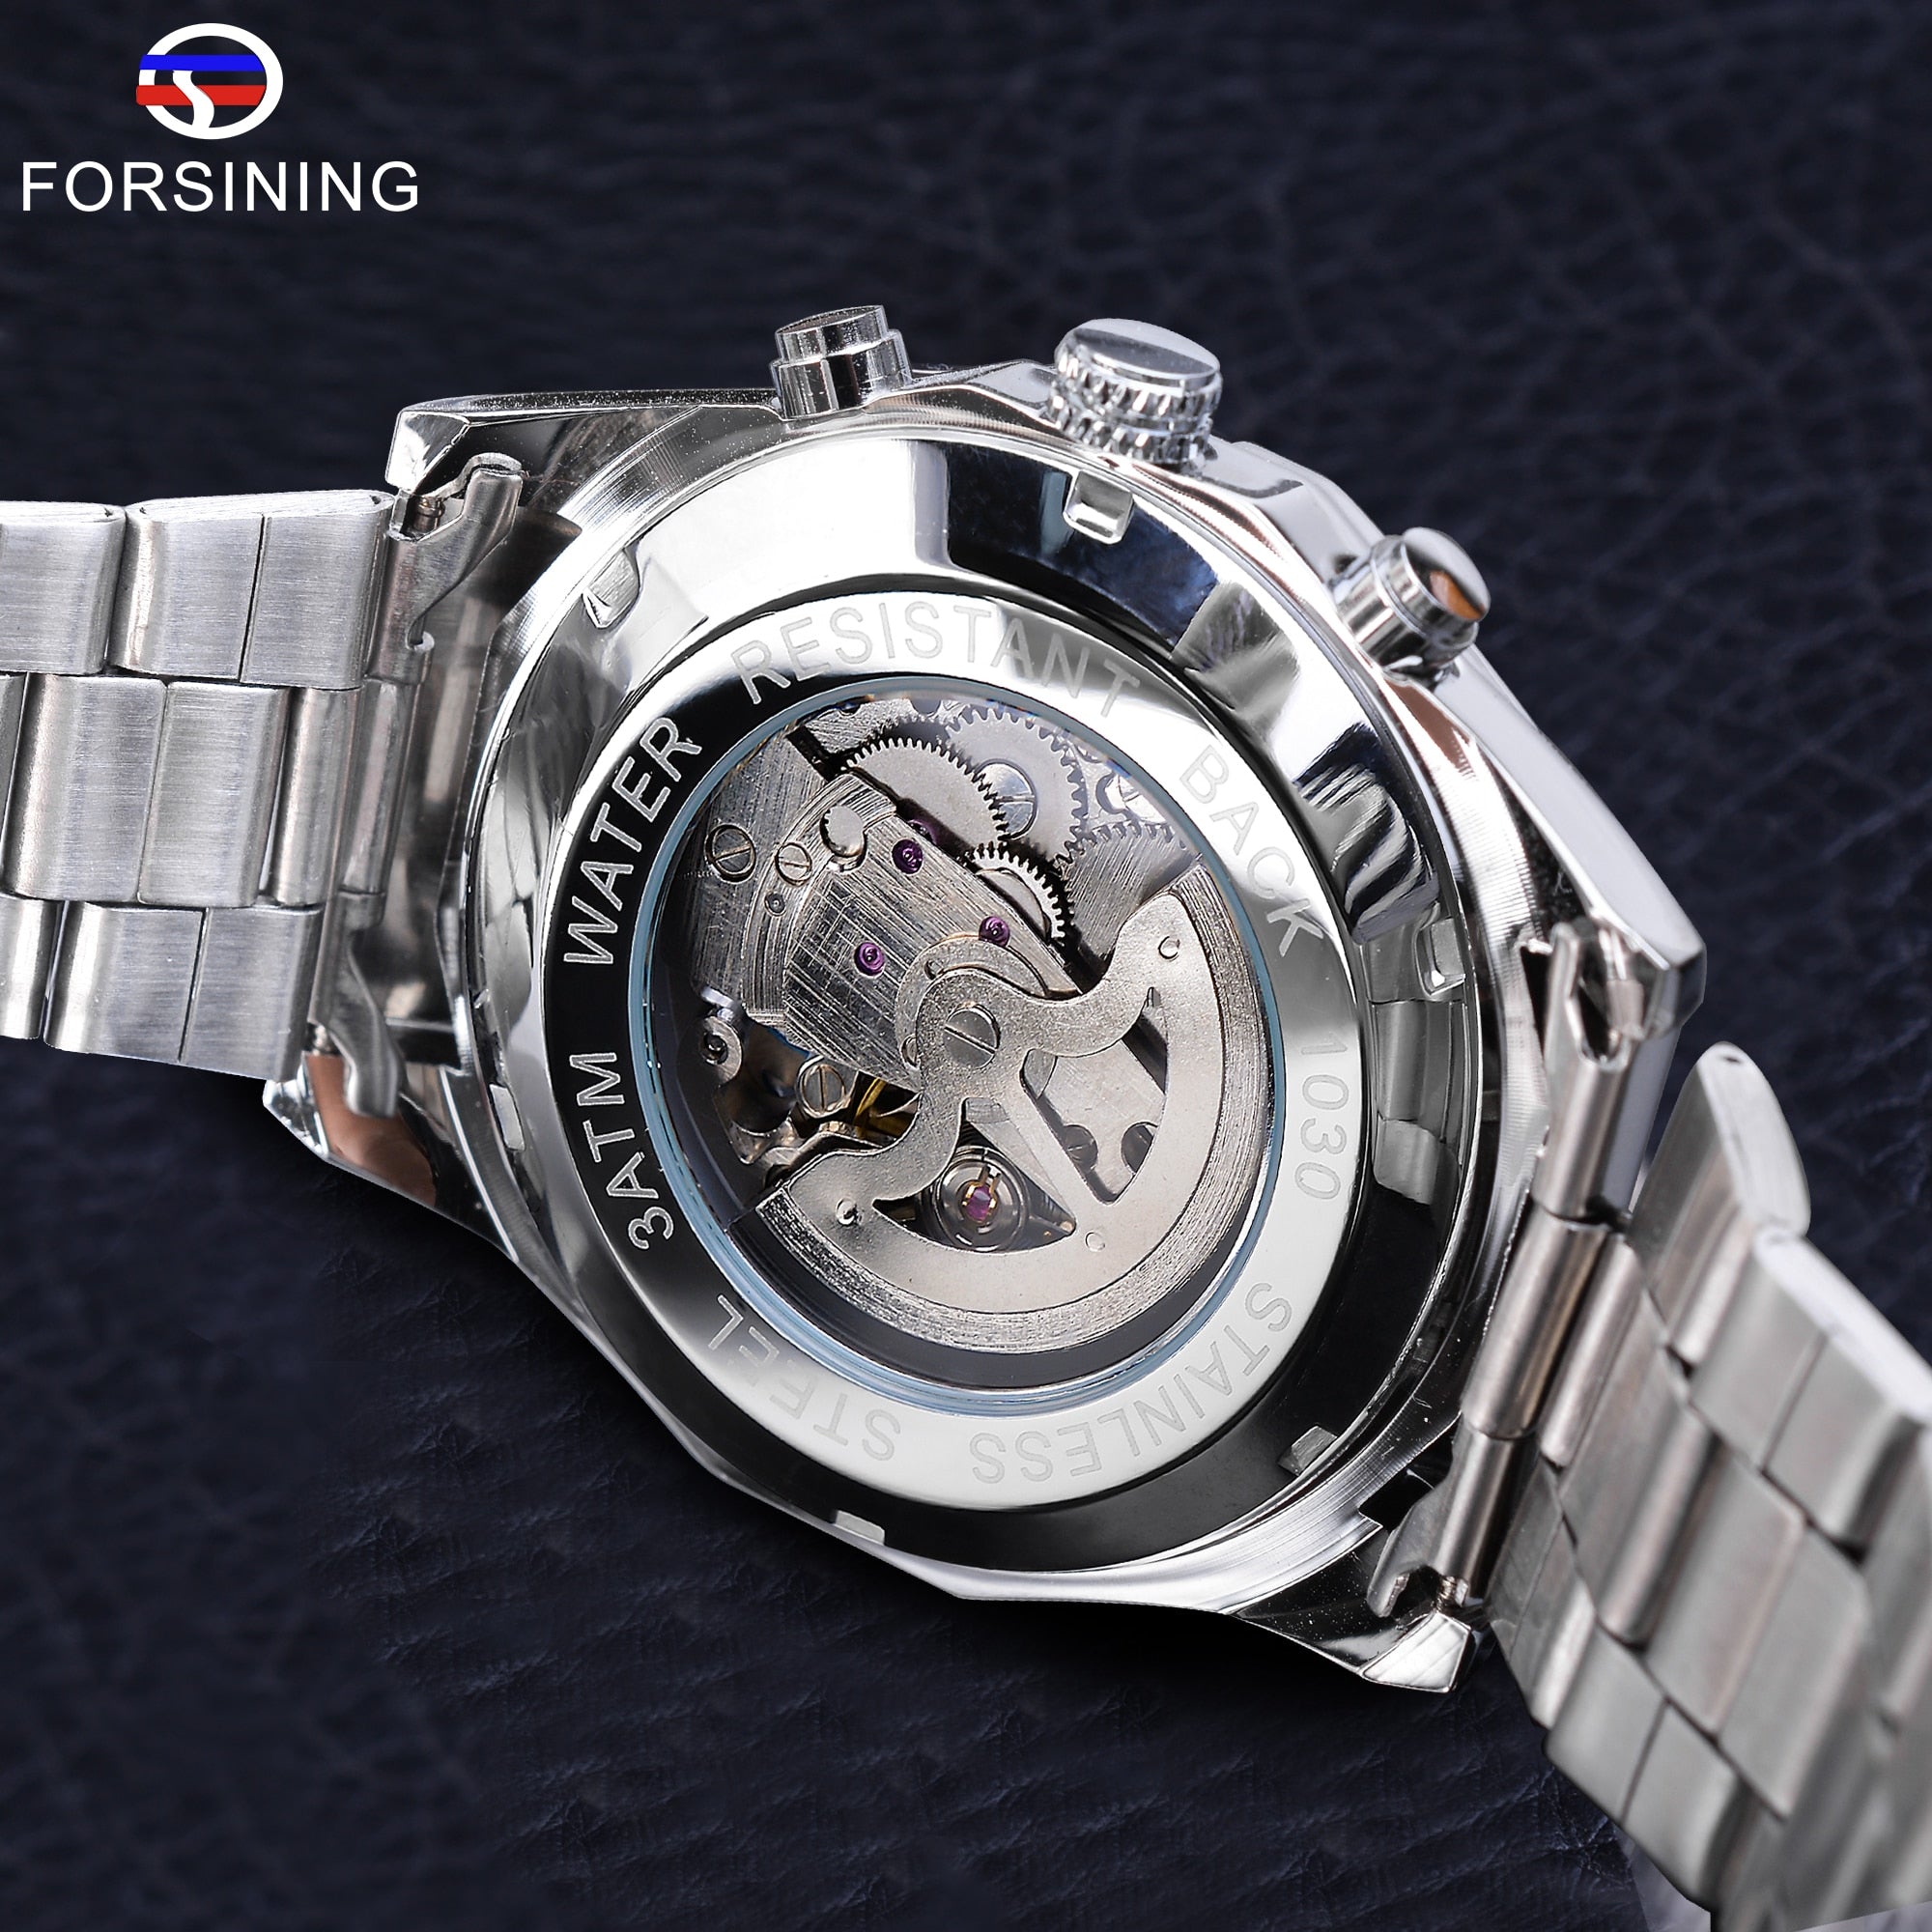 Top Brand Forsining Watch Mens Hand Wind Mechanical Wristwatch Alloy Strap  reloj | eBay